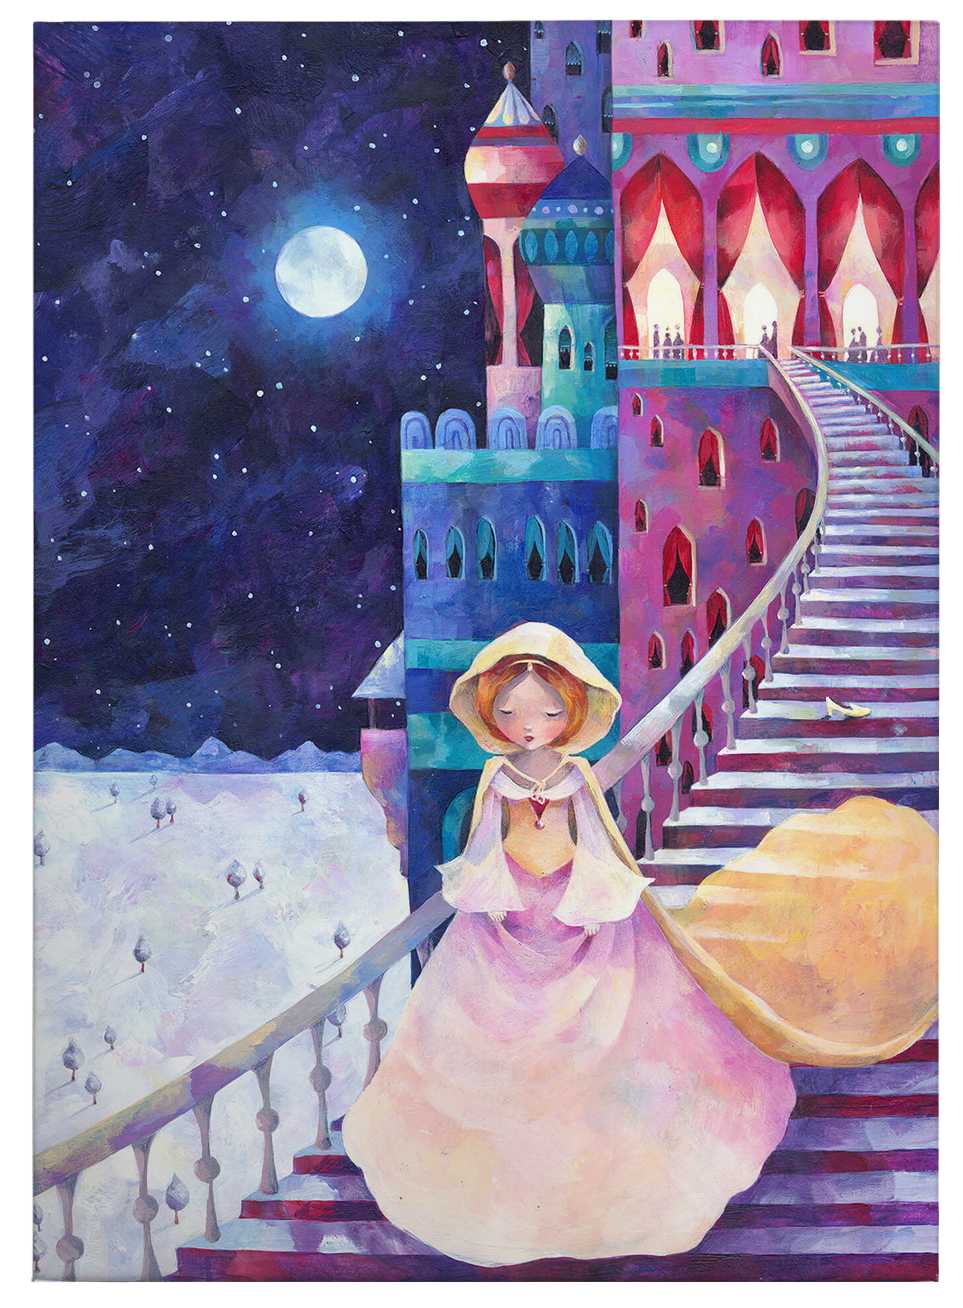             Canvas print Cinderella with fairy tale design
        